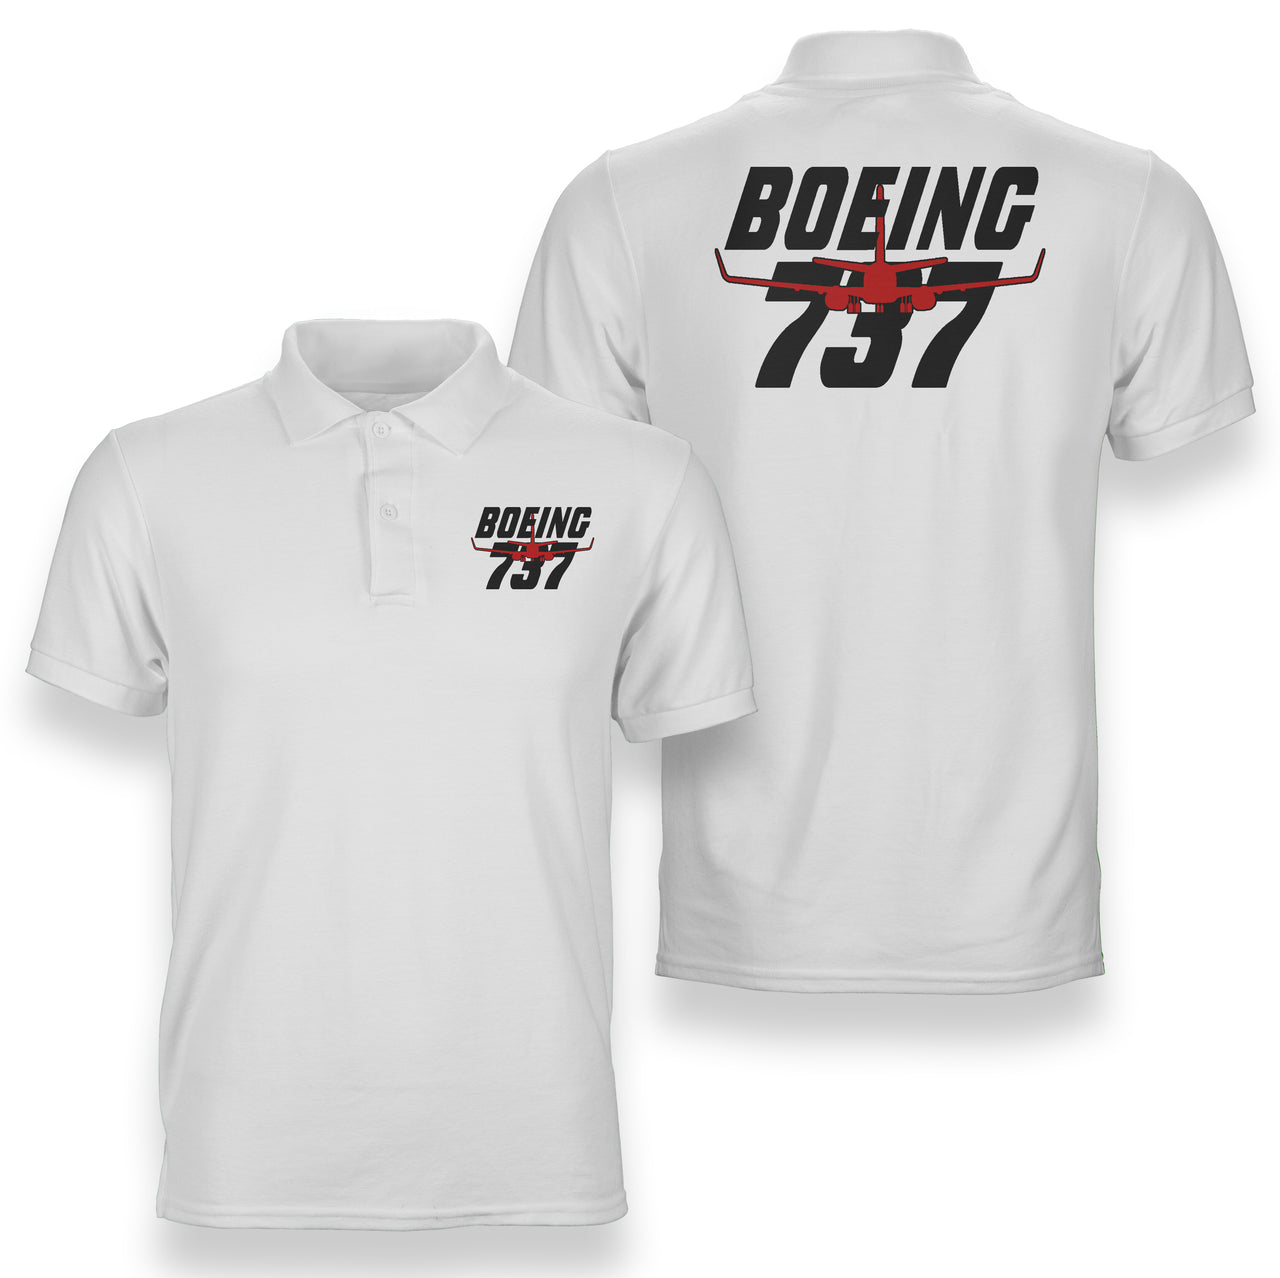 Amazing Boeing 737 Designed Double Side Polo T-Shirts